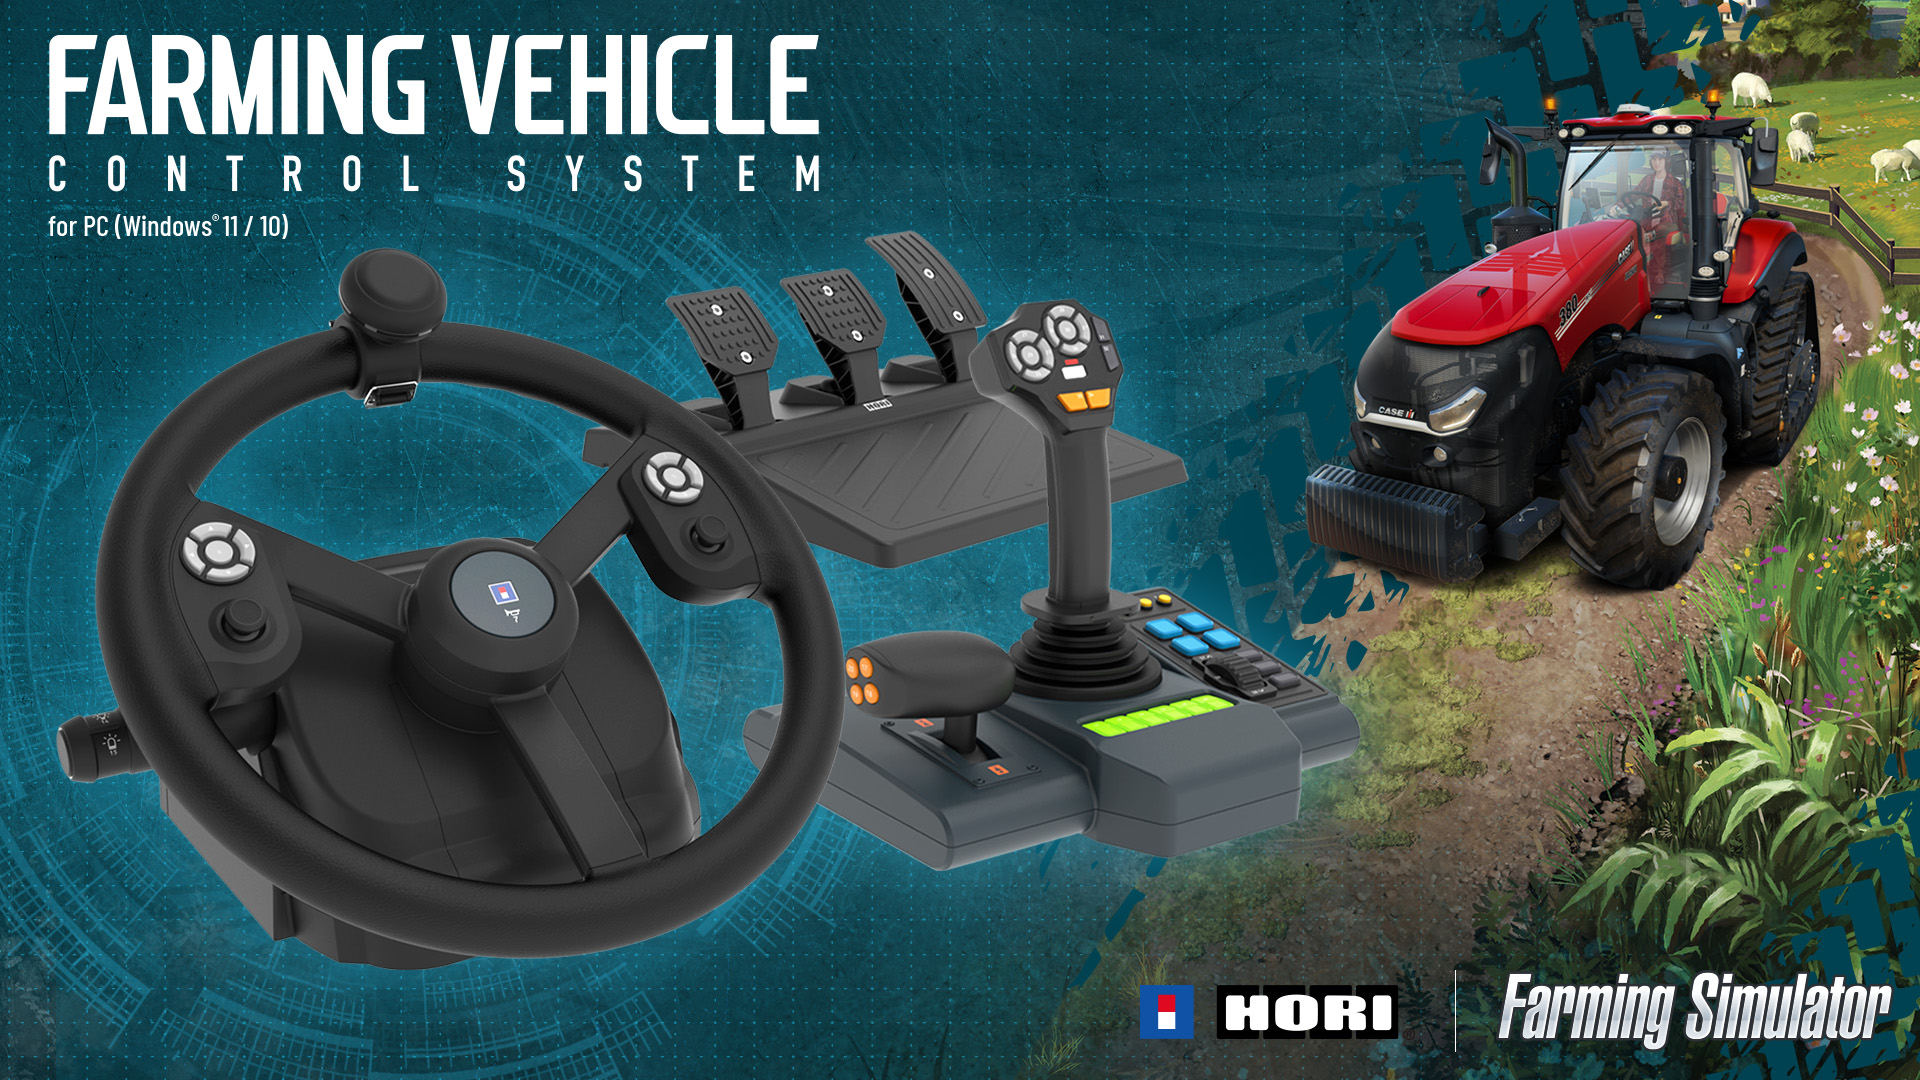 Volant Farming Vehicle Control System - Hori